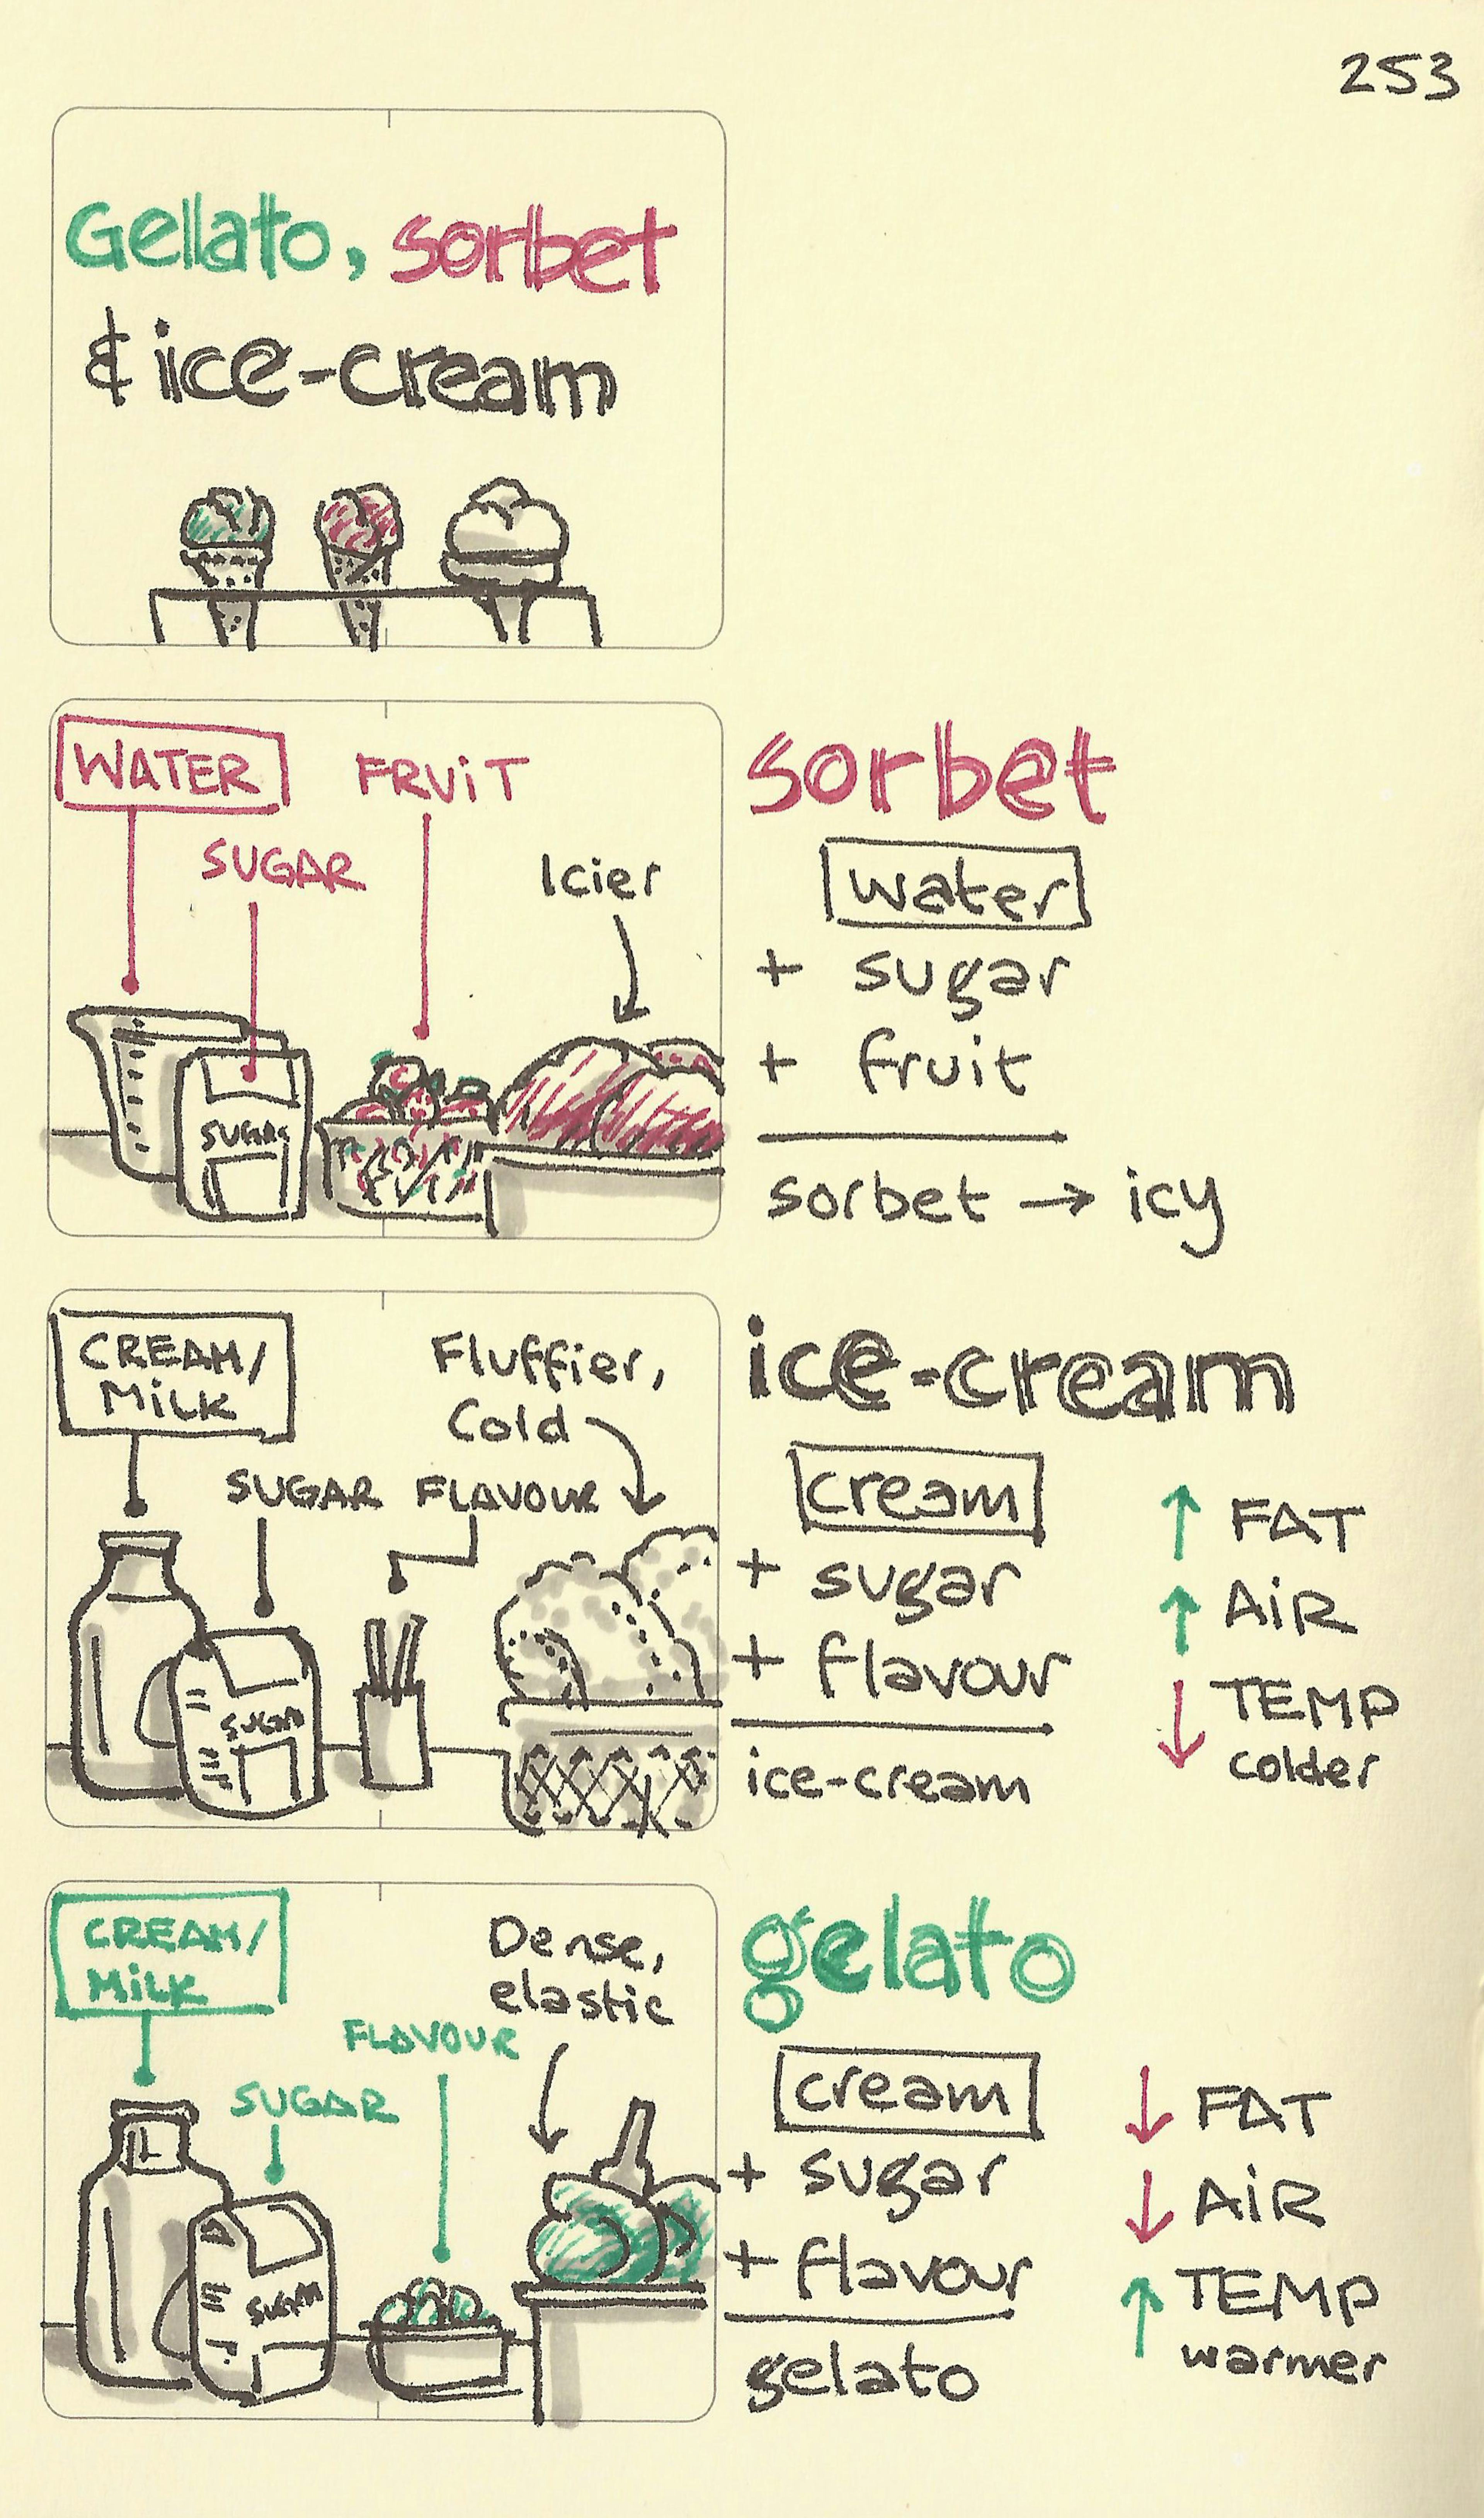 Gelato, sorbet and ice-cream - Sketchplanations